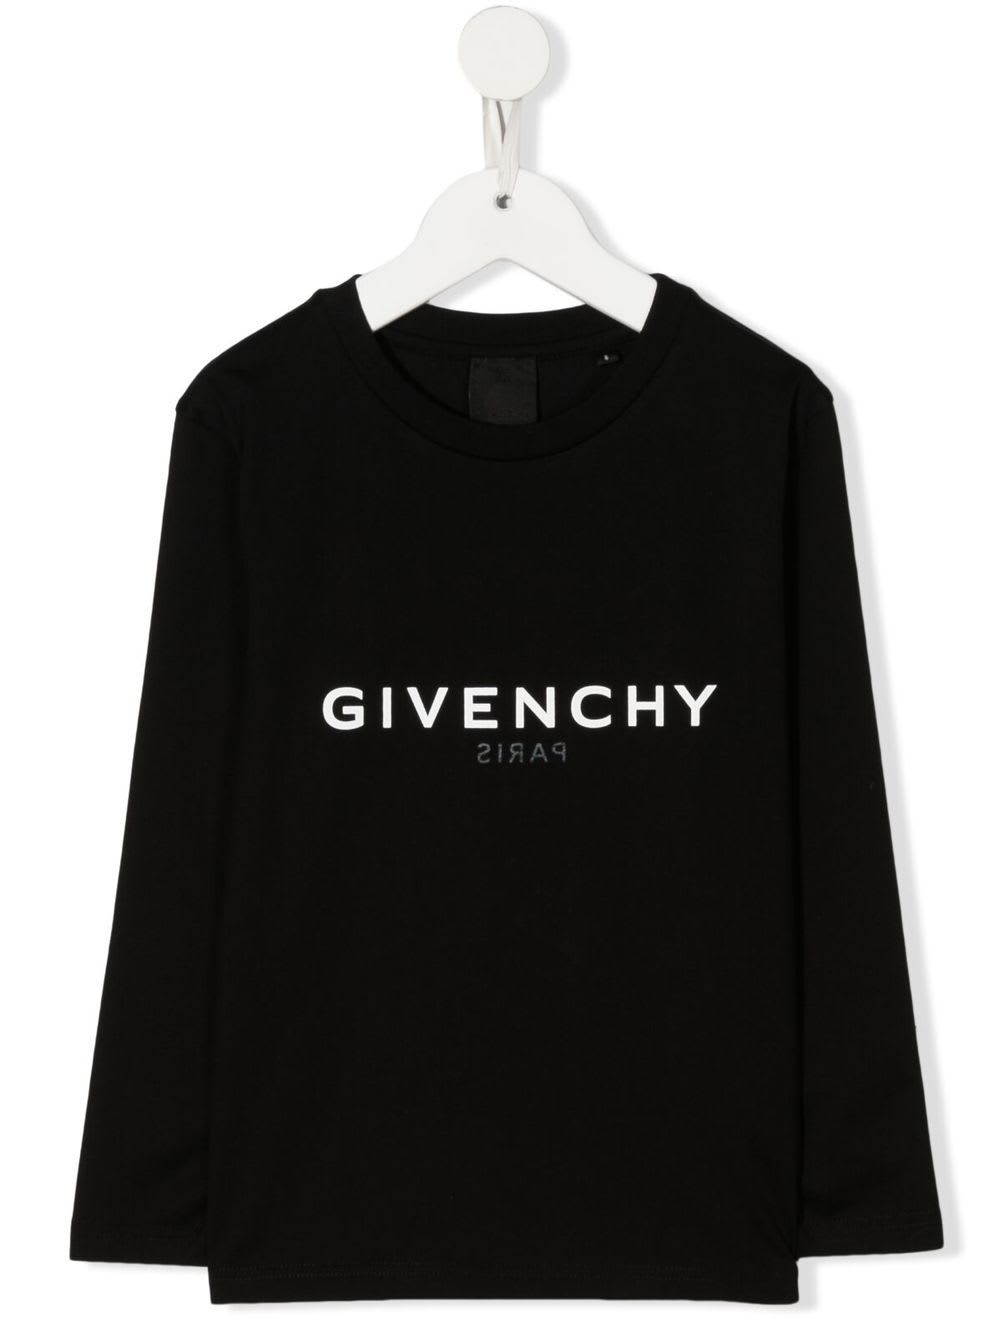 Givenchy Black Cotton Tshirt